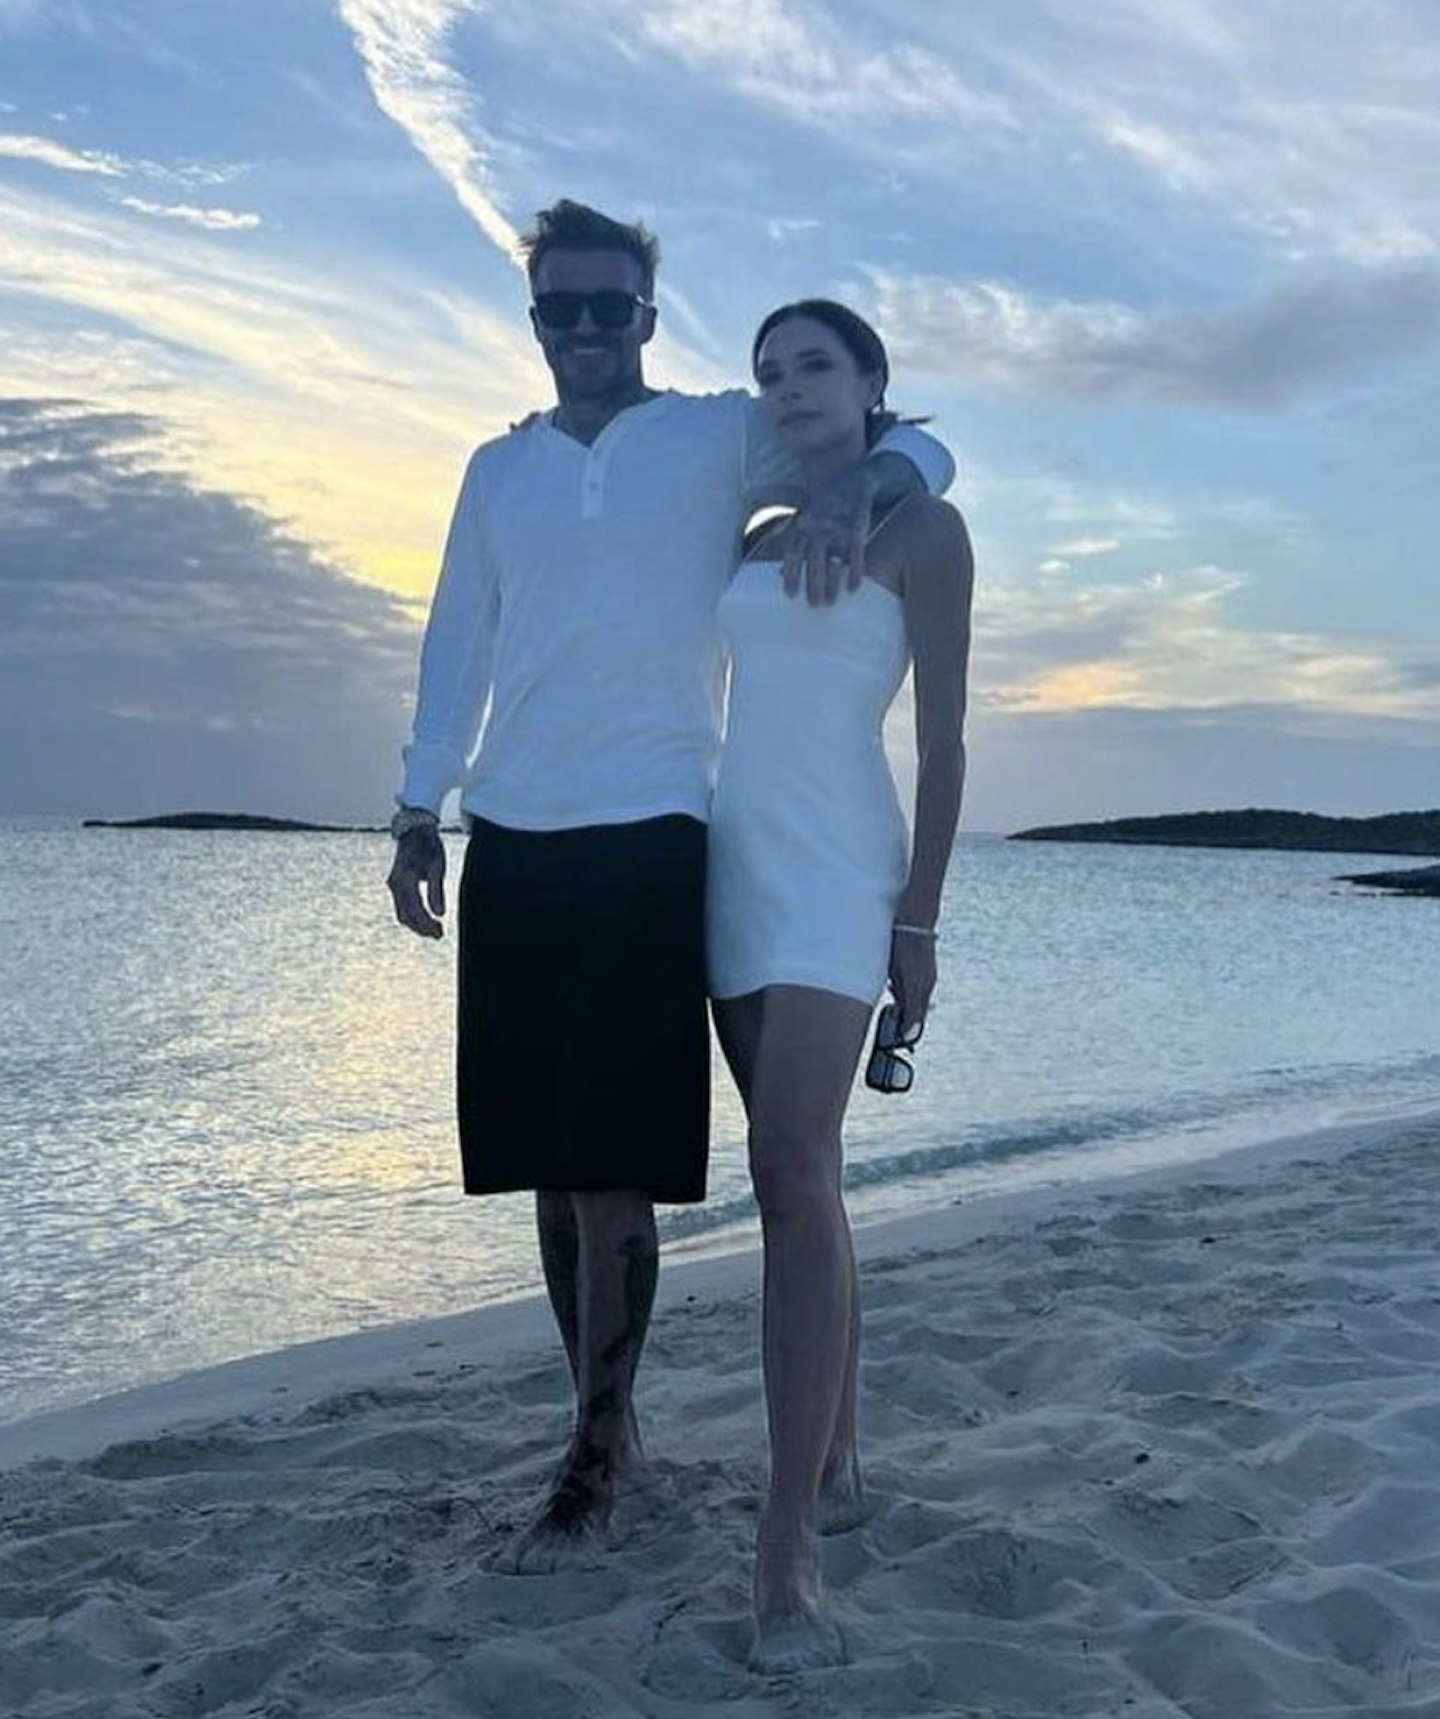 Victoria Beckham Instagram post of her and David